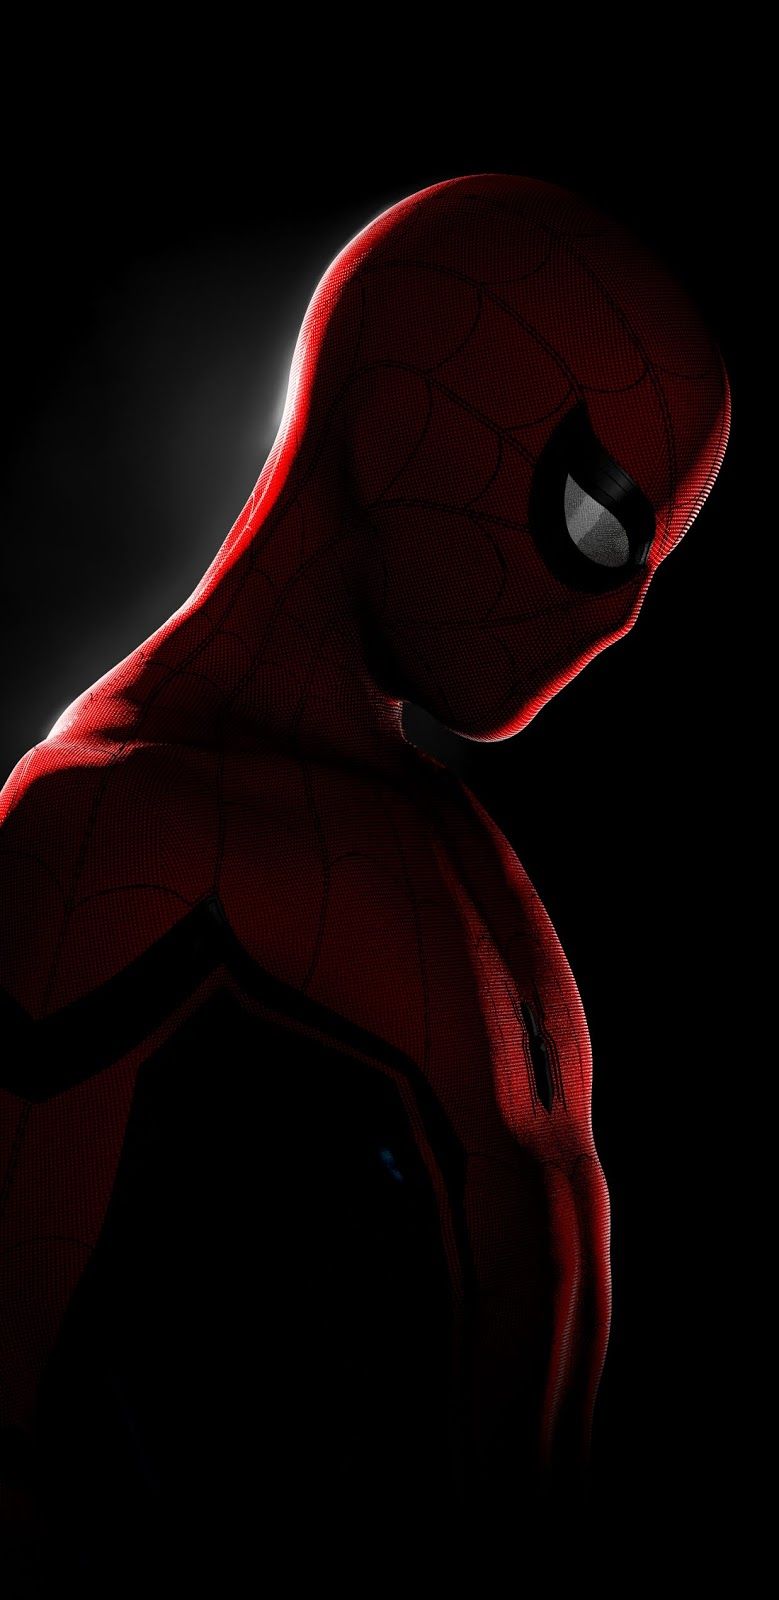 Spiderman In the Dark Deadpool Marvel wallpaper Marvel phone